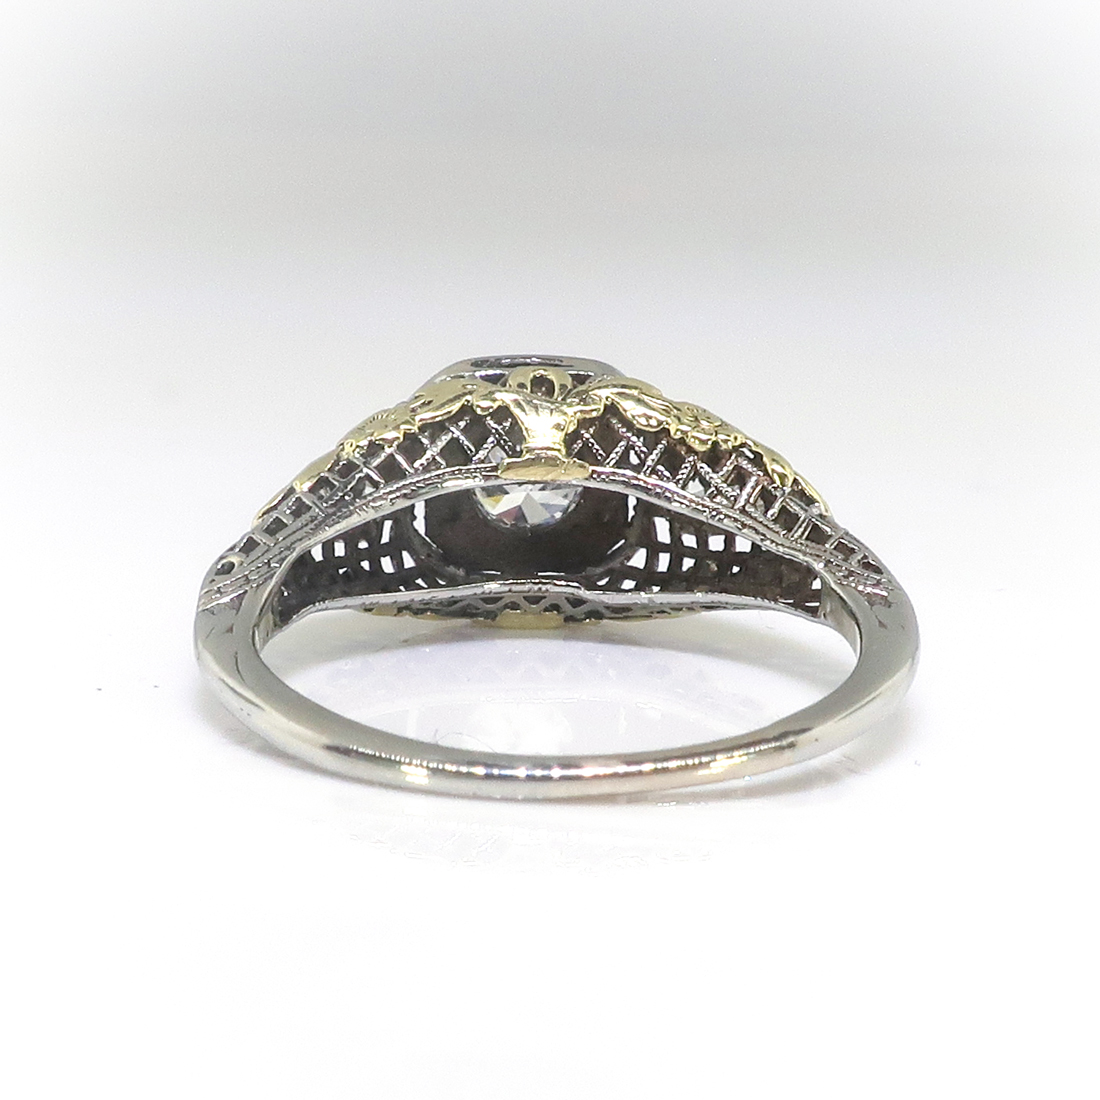 Art Deco Engagement Ring Vintage 1930s 42ct Tw Transitional Cut Five Stone Diamond Filigree